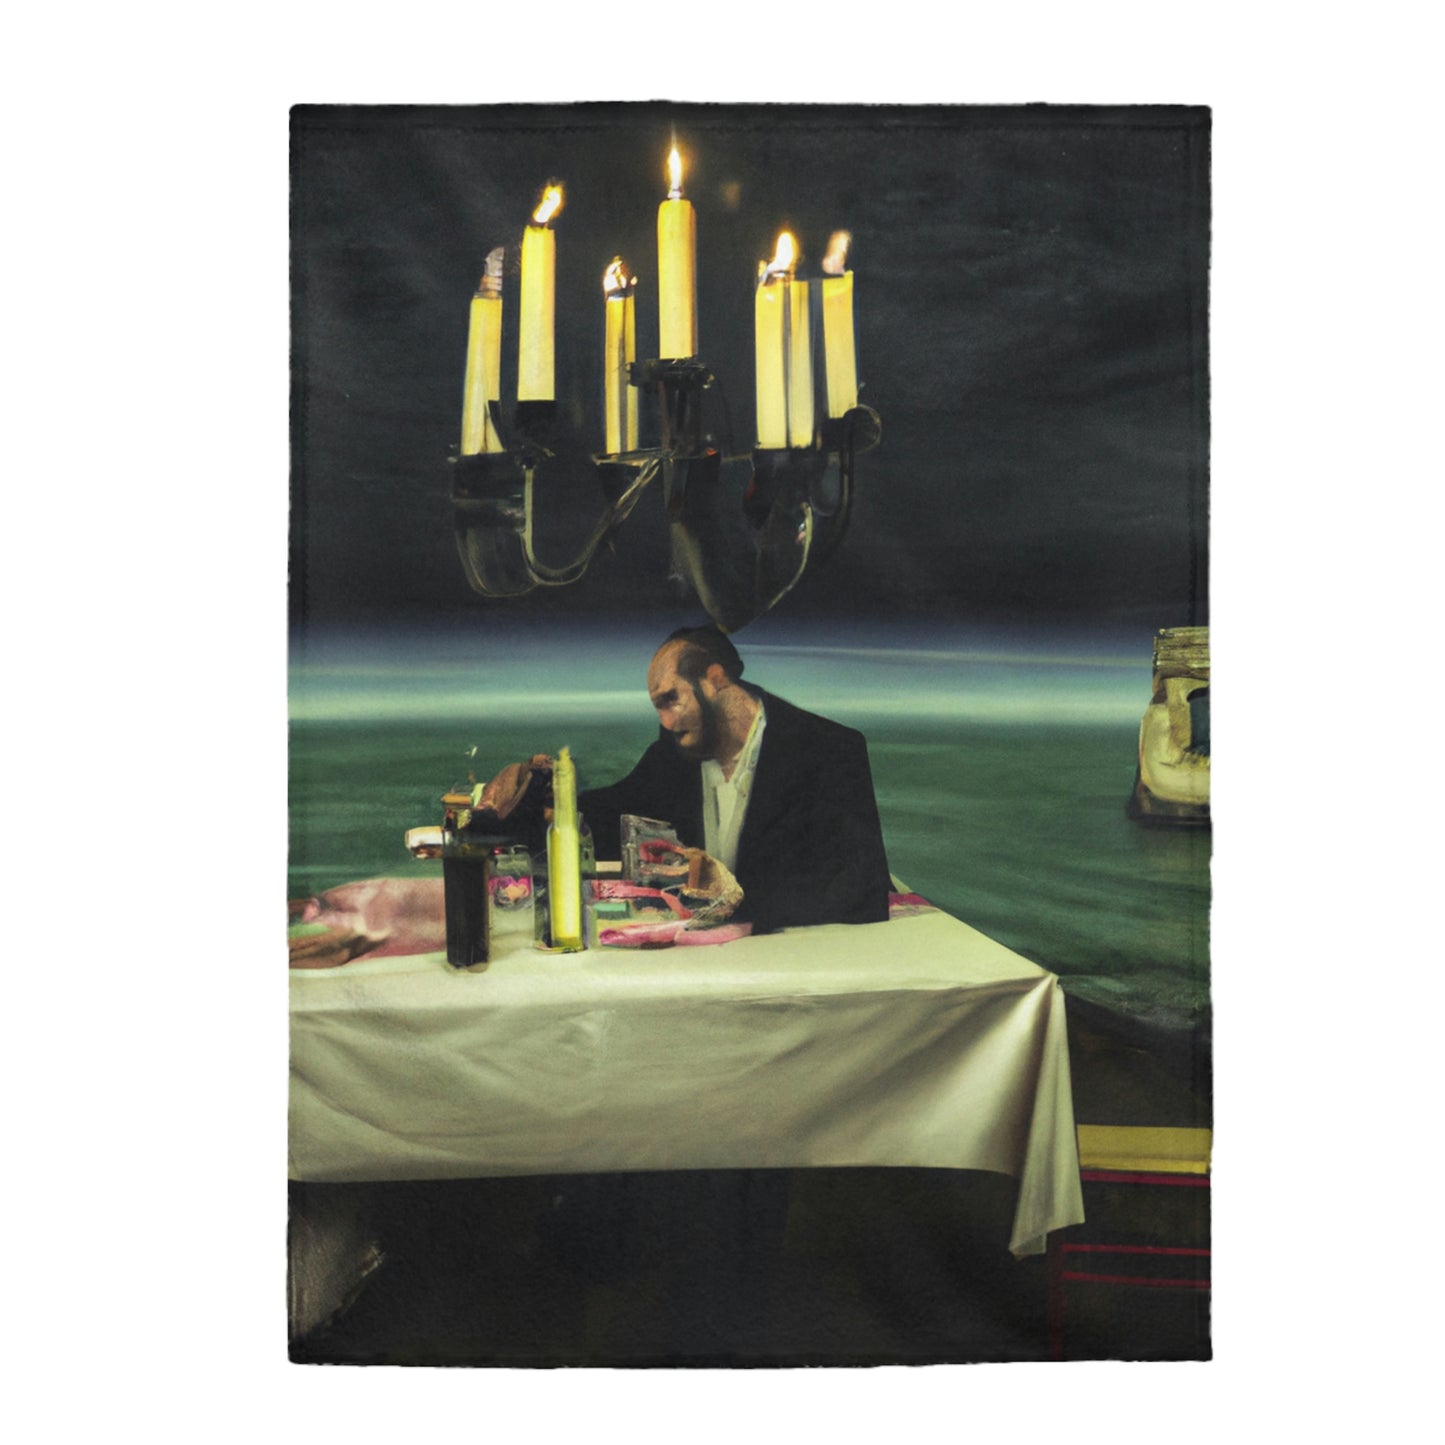 "Un faro de romance: una cena íntima a la luz de las velas en un faro olvidado" - La manta de felpa Alien Velveteen